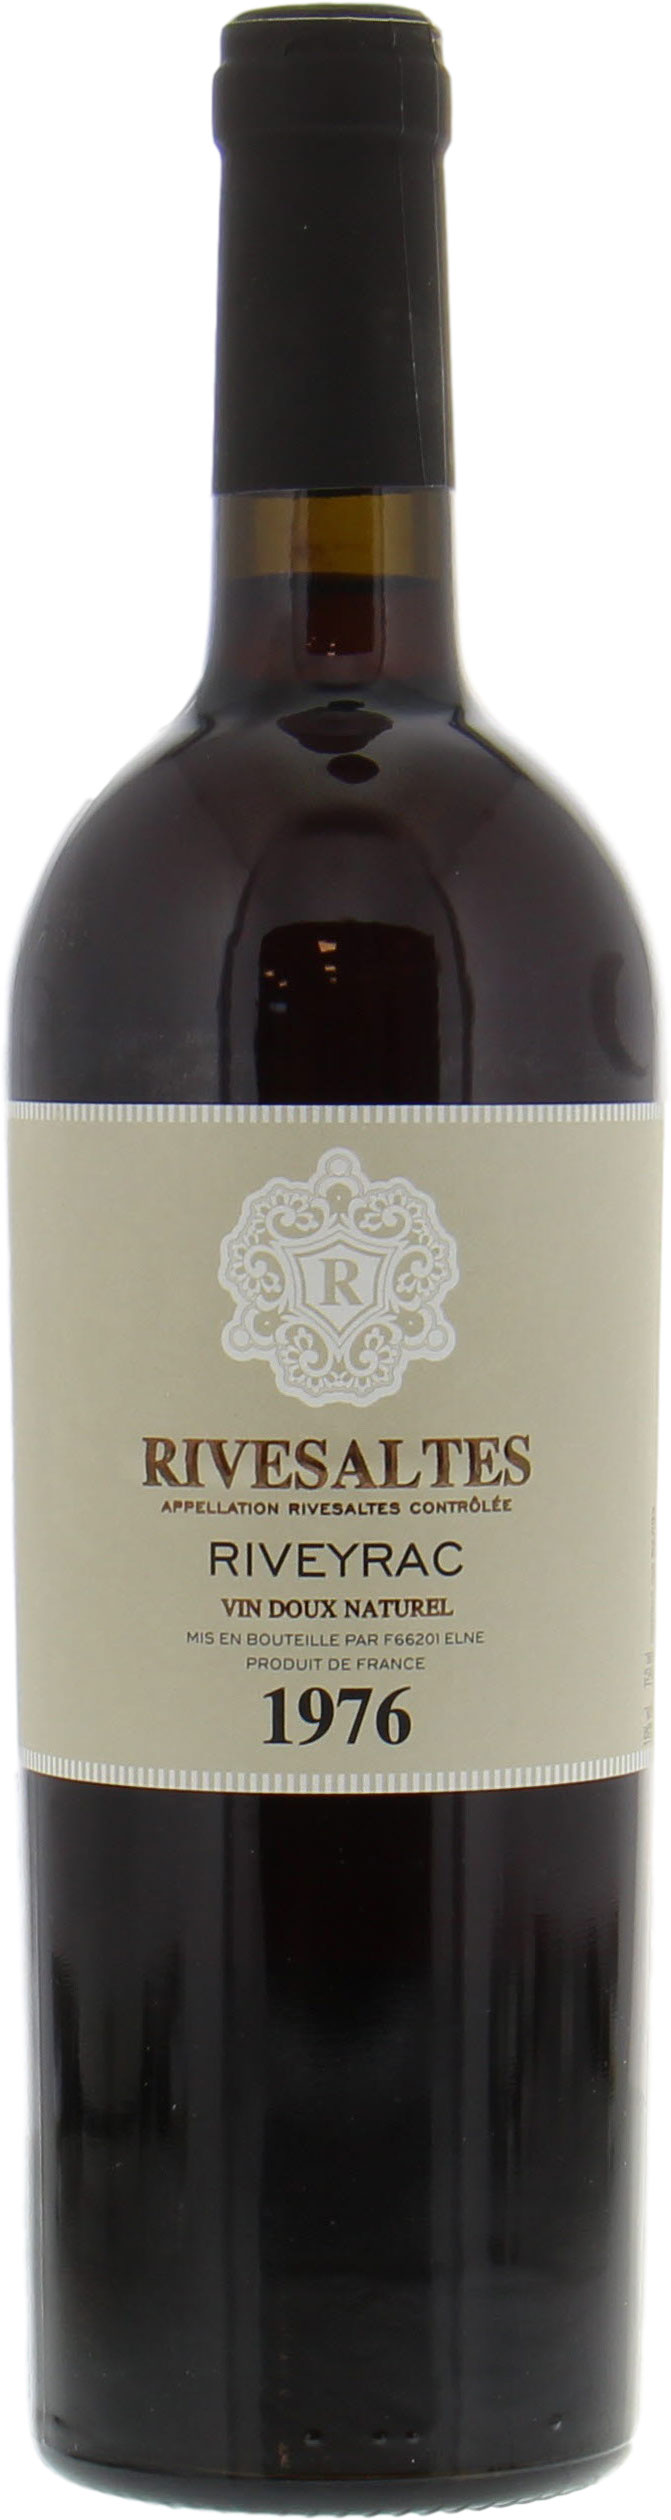 Riveyrac - Rivesaltes 1976